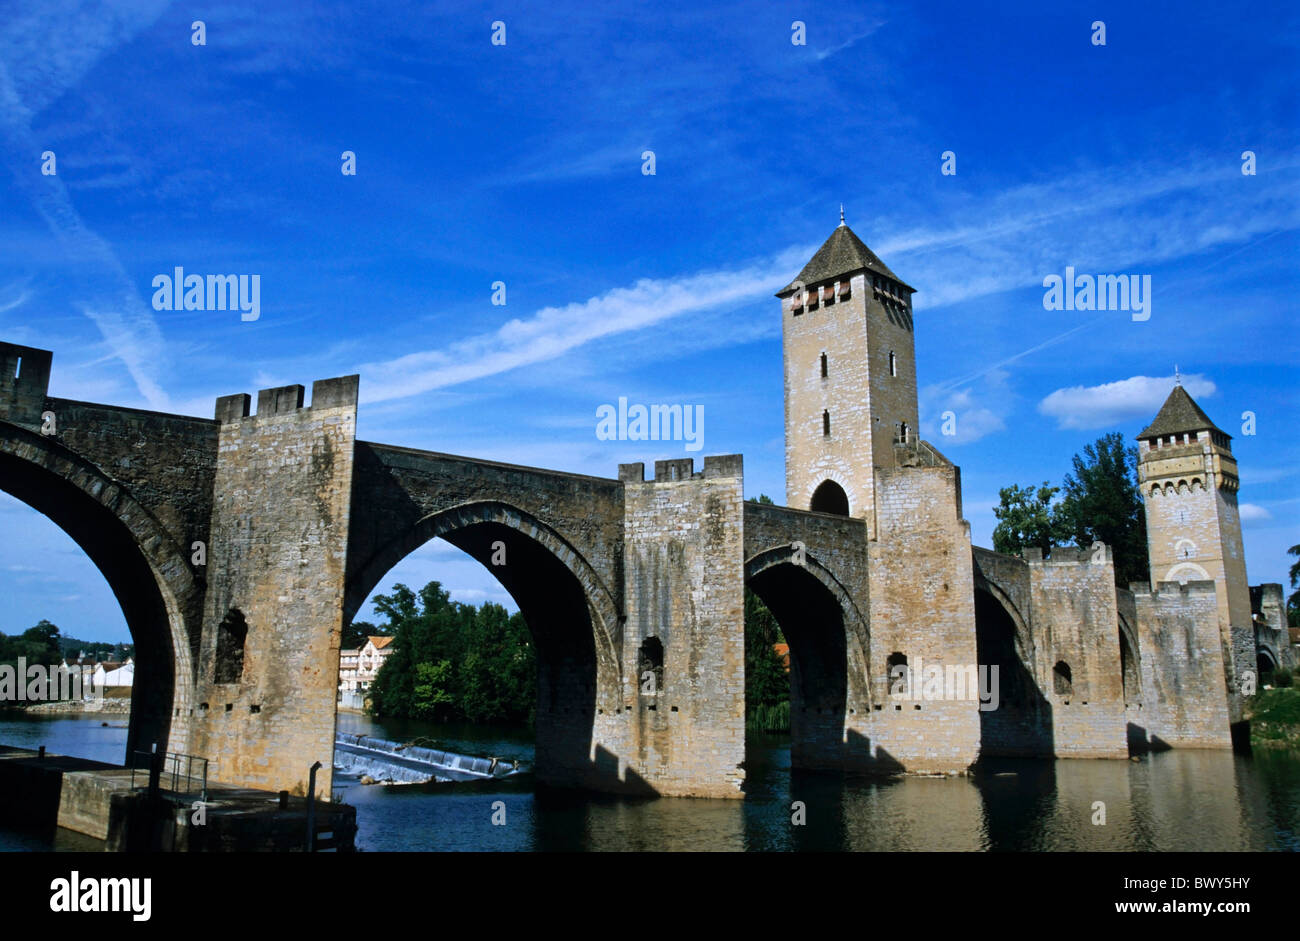 Valantre Bridge crossing the Lot River, Cahors, France. Stock Photo